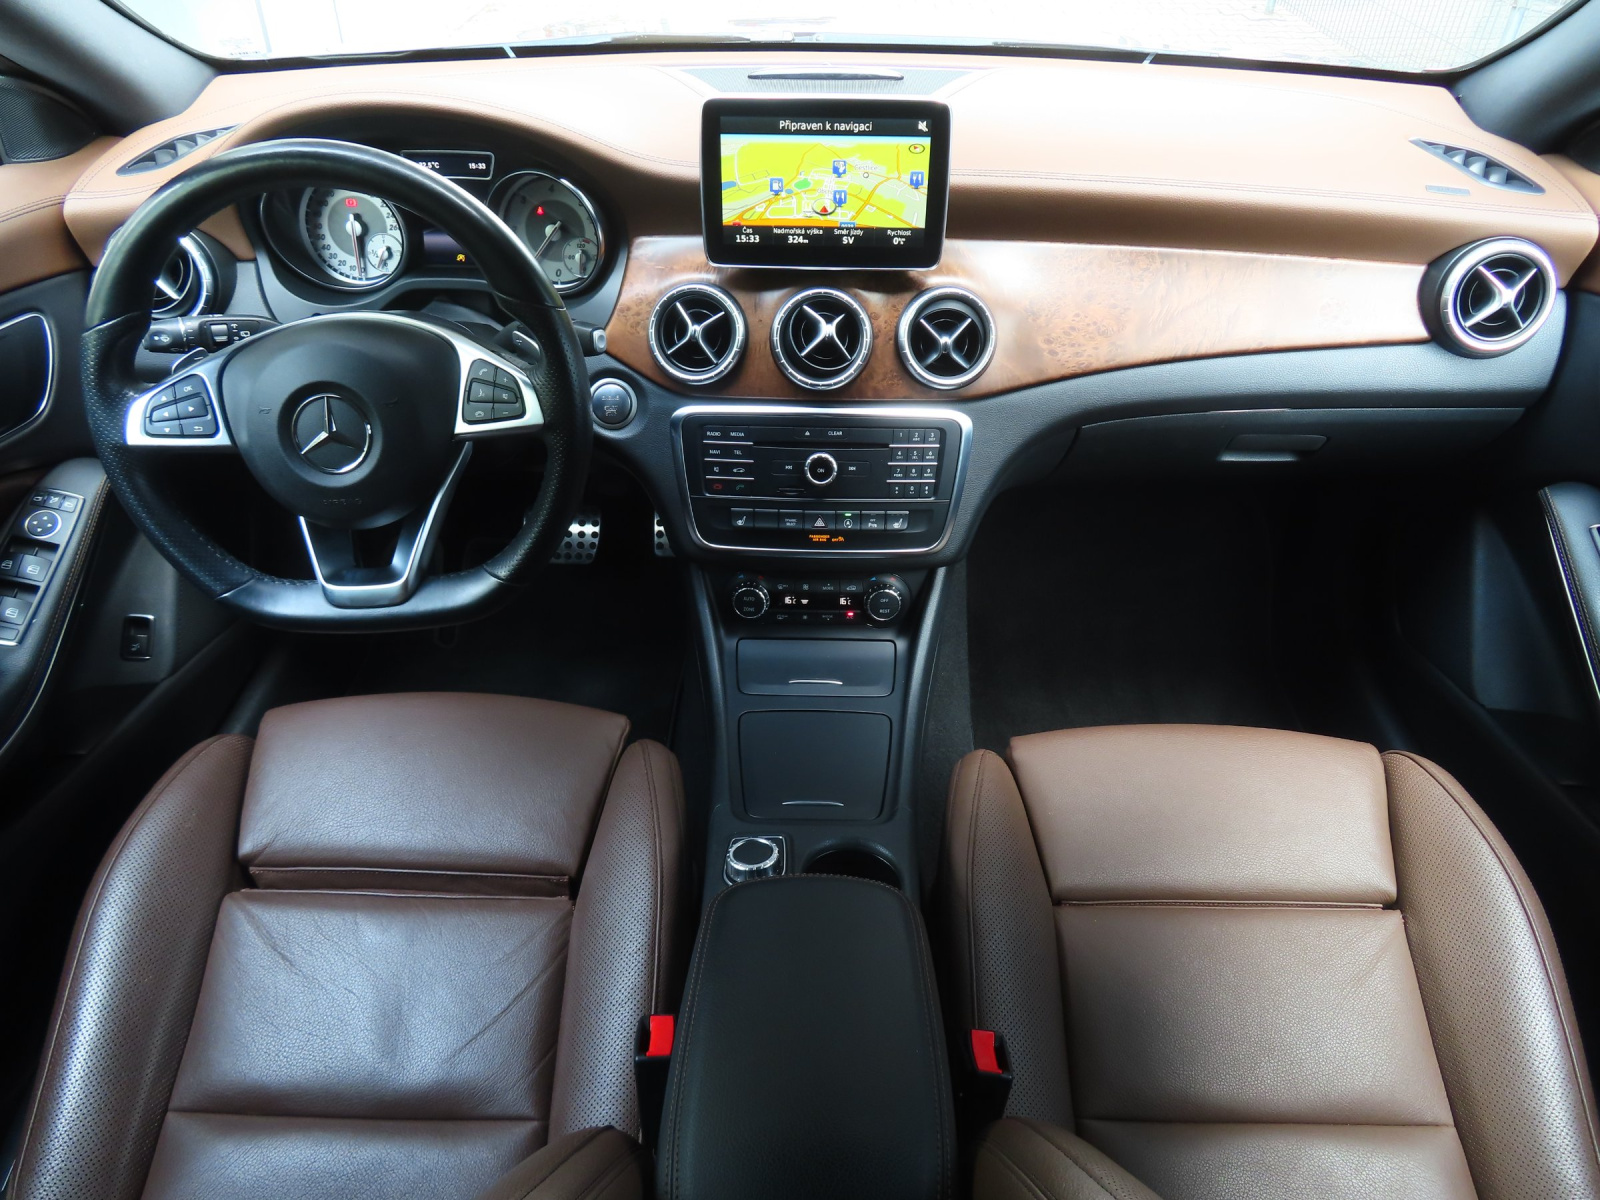 Mercedes-Benz CLA, 2015, 220 CDI 4MATIC, 130kW, 4x4